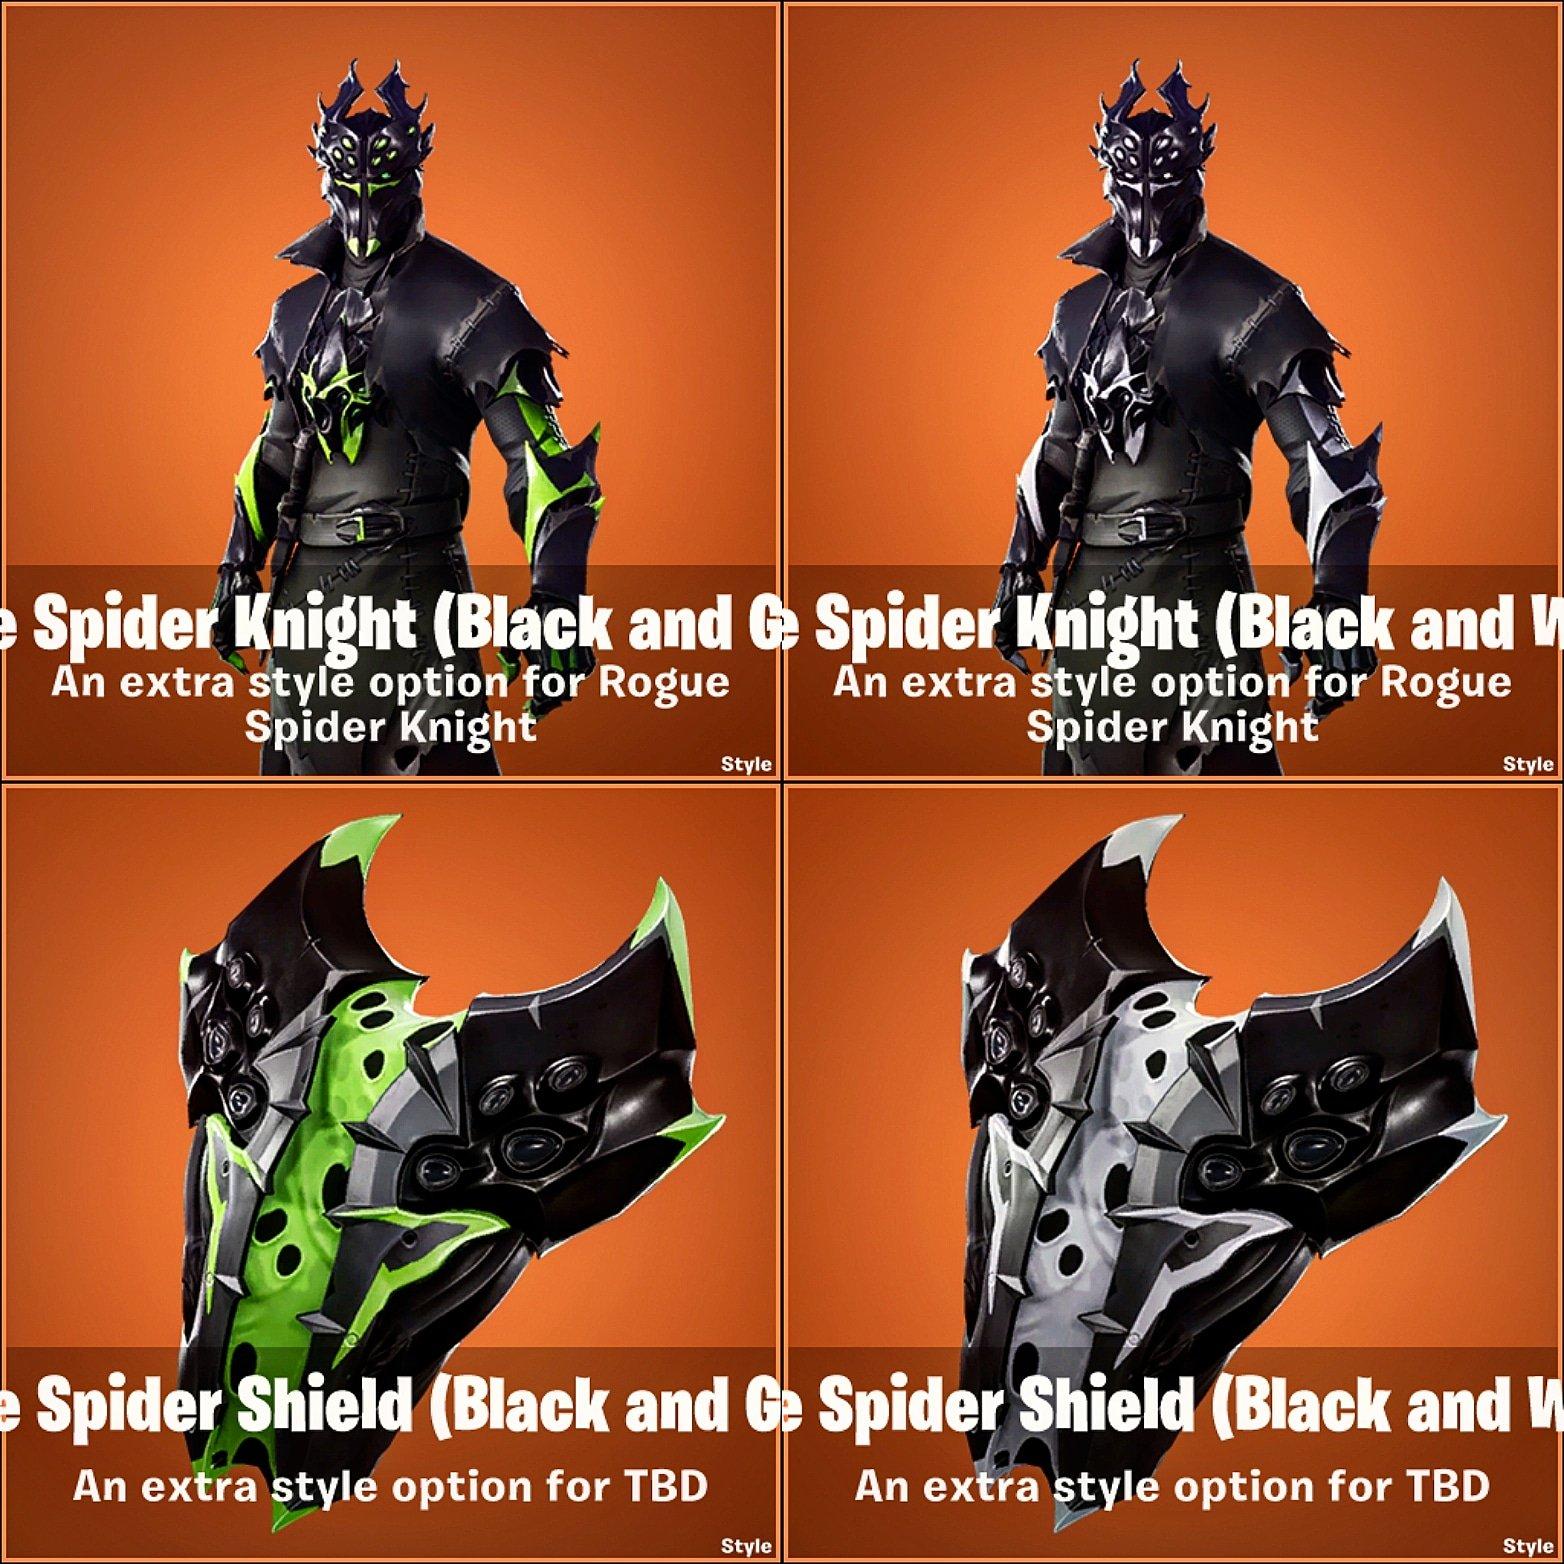 Rogue Spider Knight Fortnite wallpaper